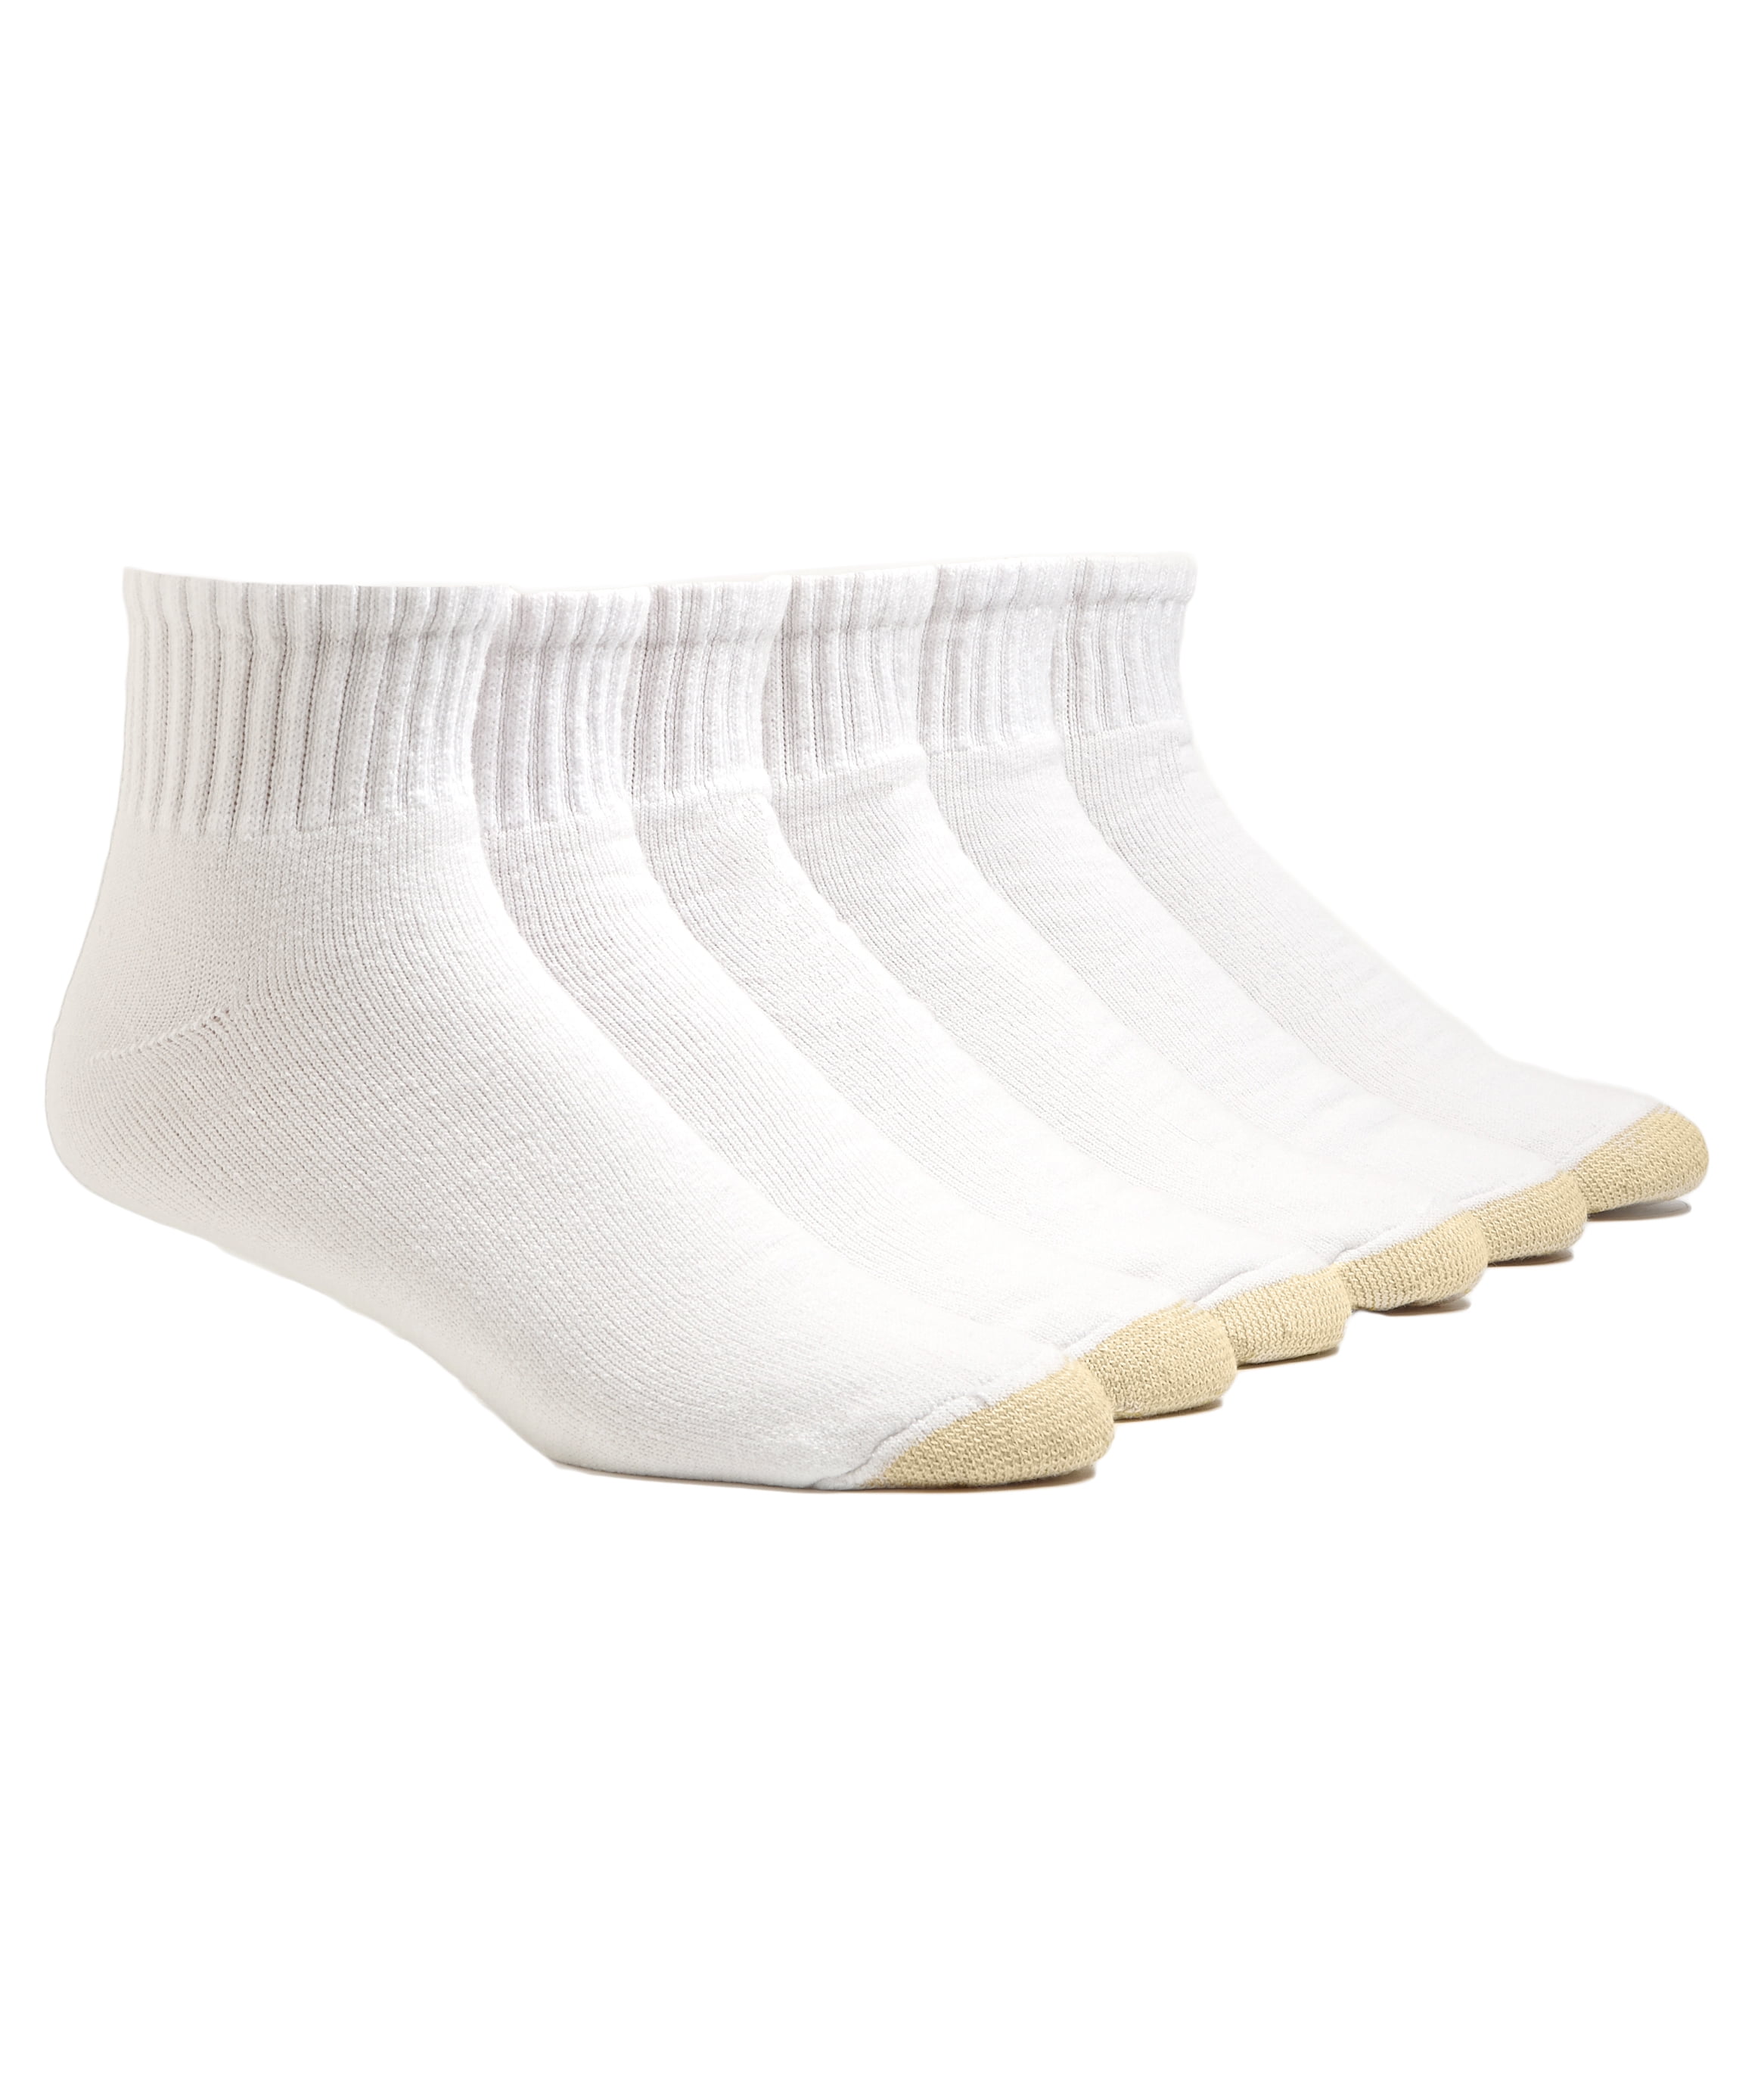 Gold Toe Men's 656p Cotton Quarter Athletic Socks 6-pack Size 6-12